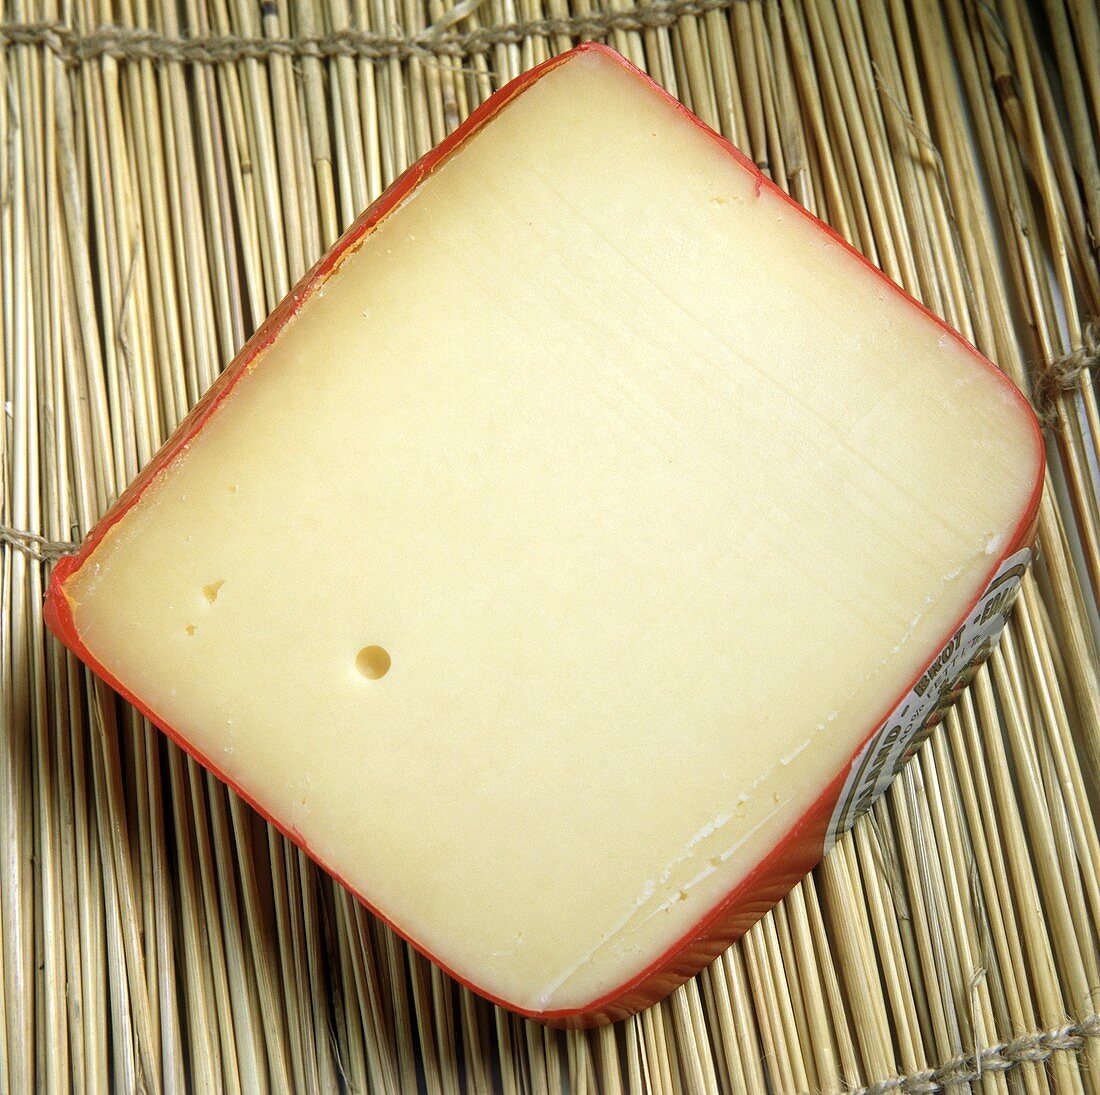 A Slice of Edam Cheese